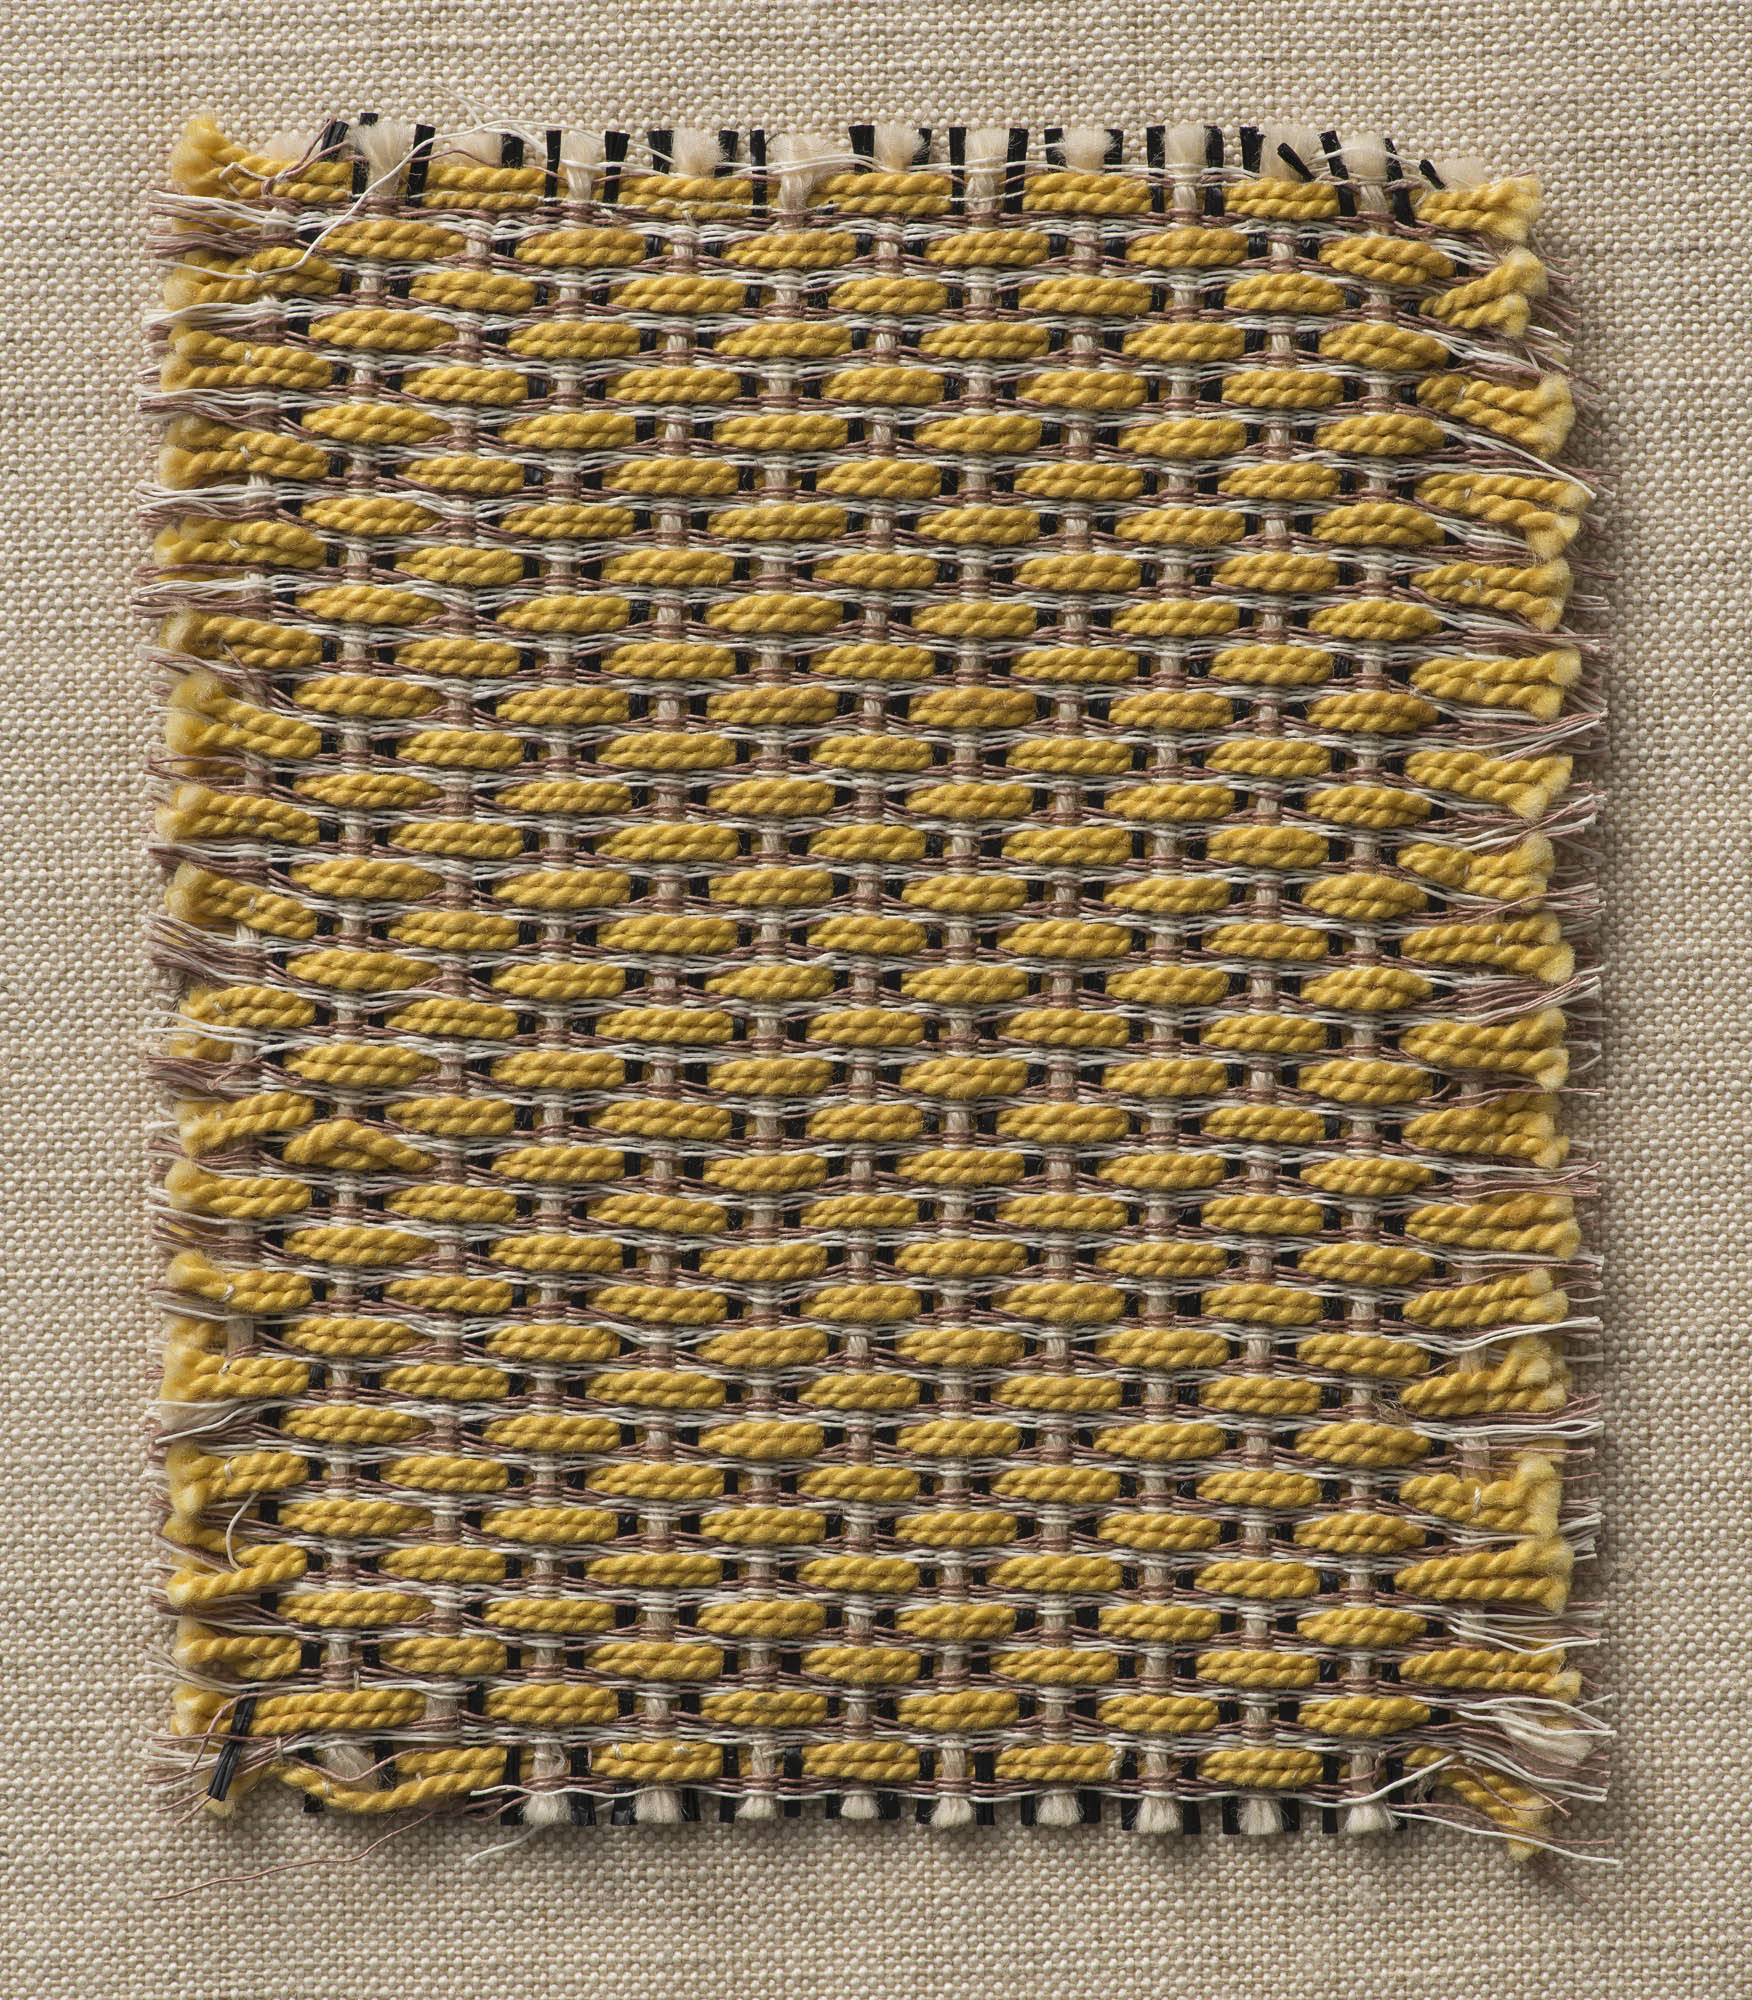 (untitled) Gunta Stölzl Weaving pattern for throw blanket